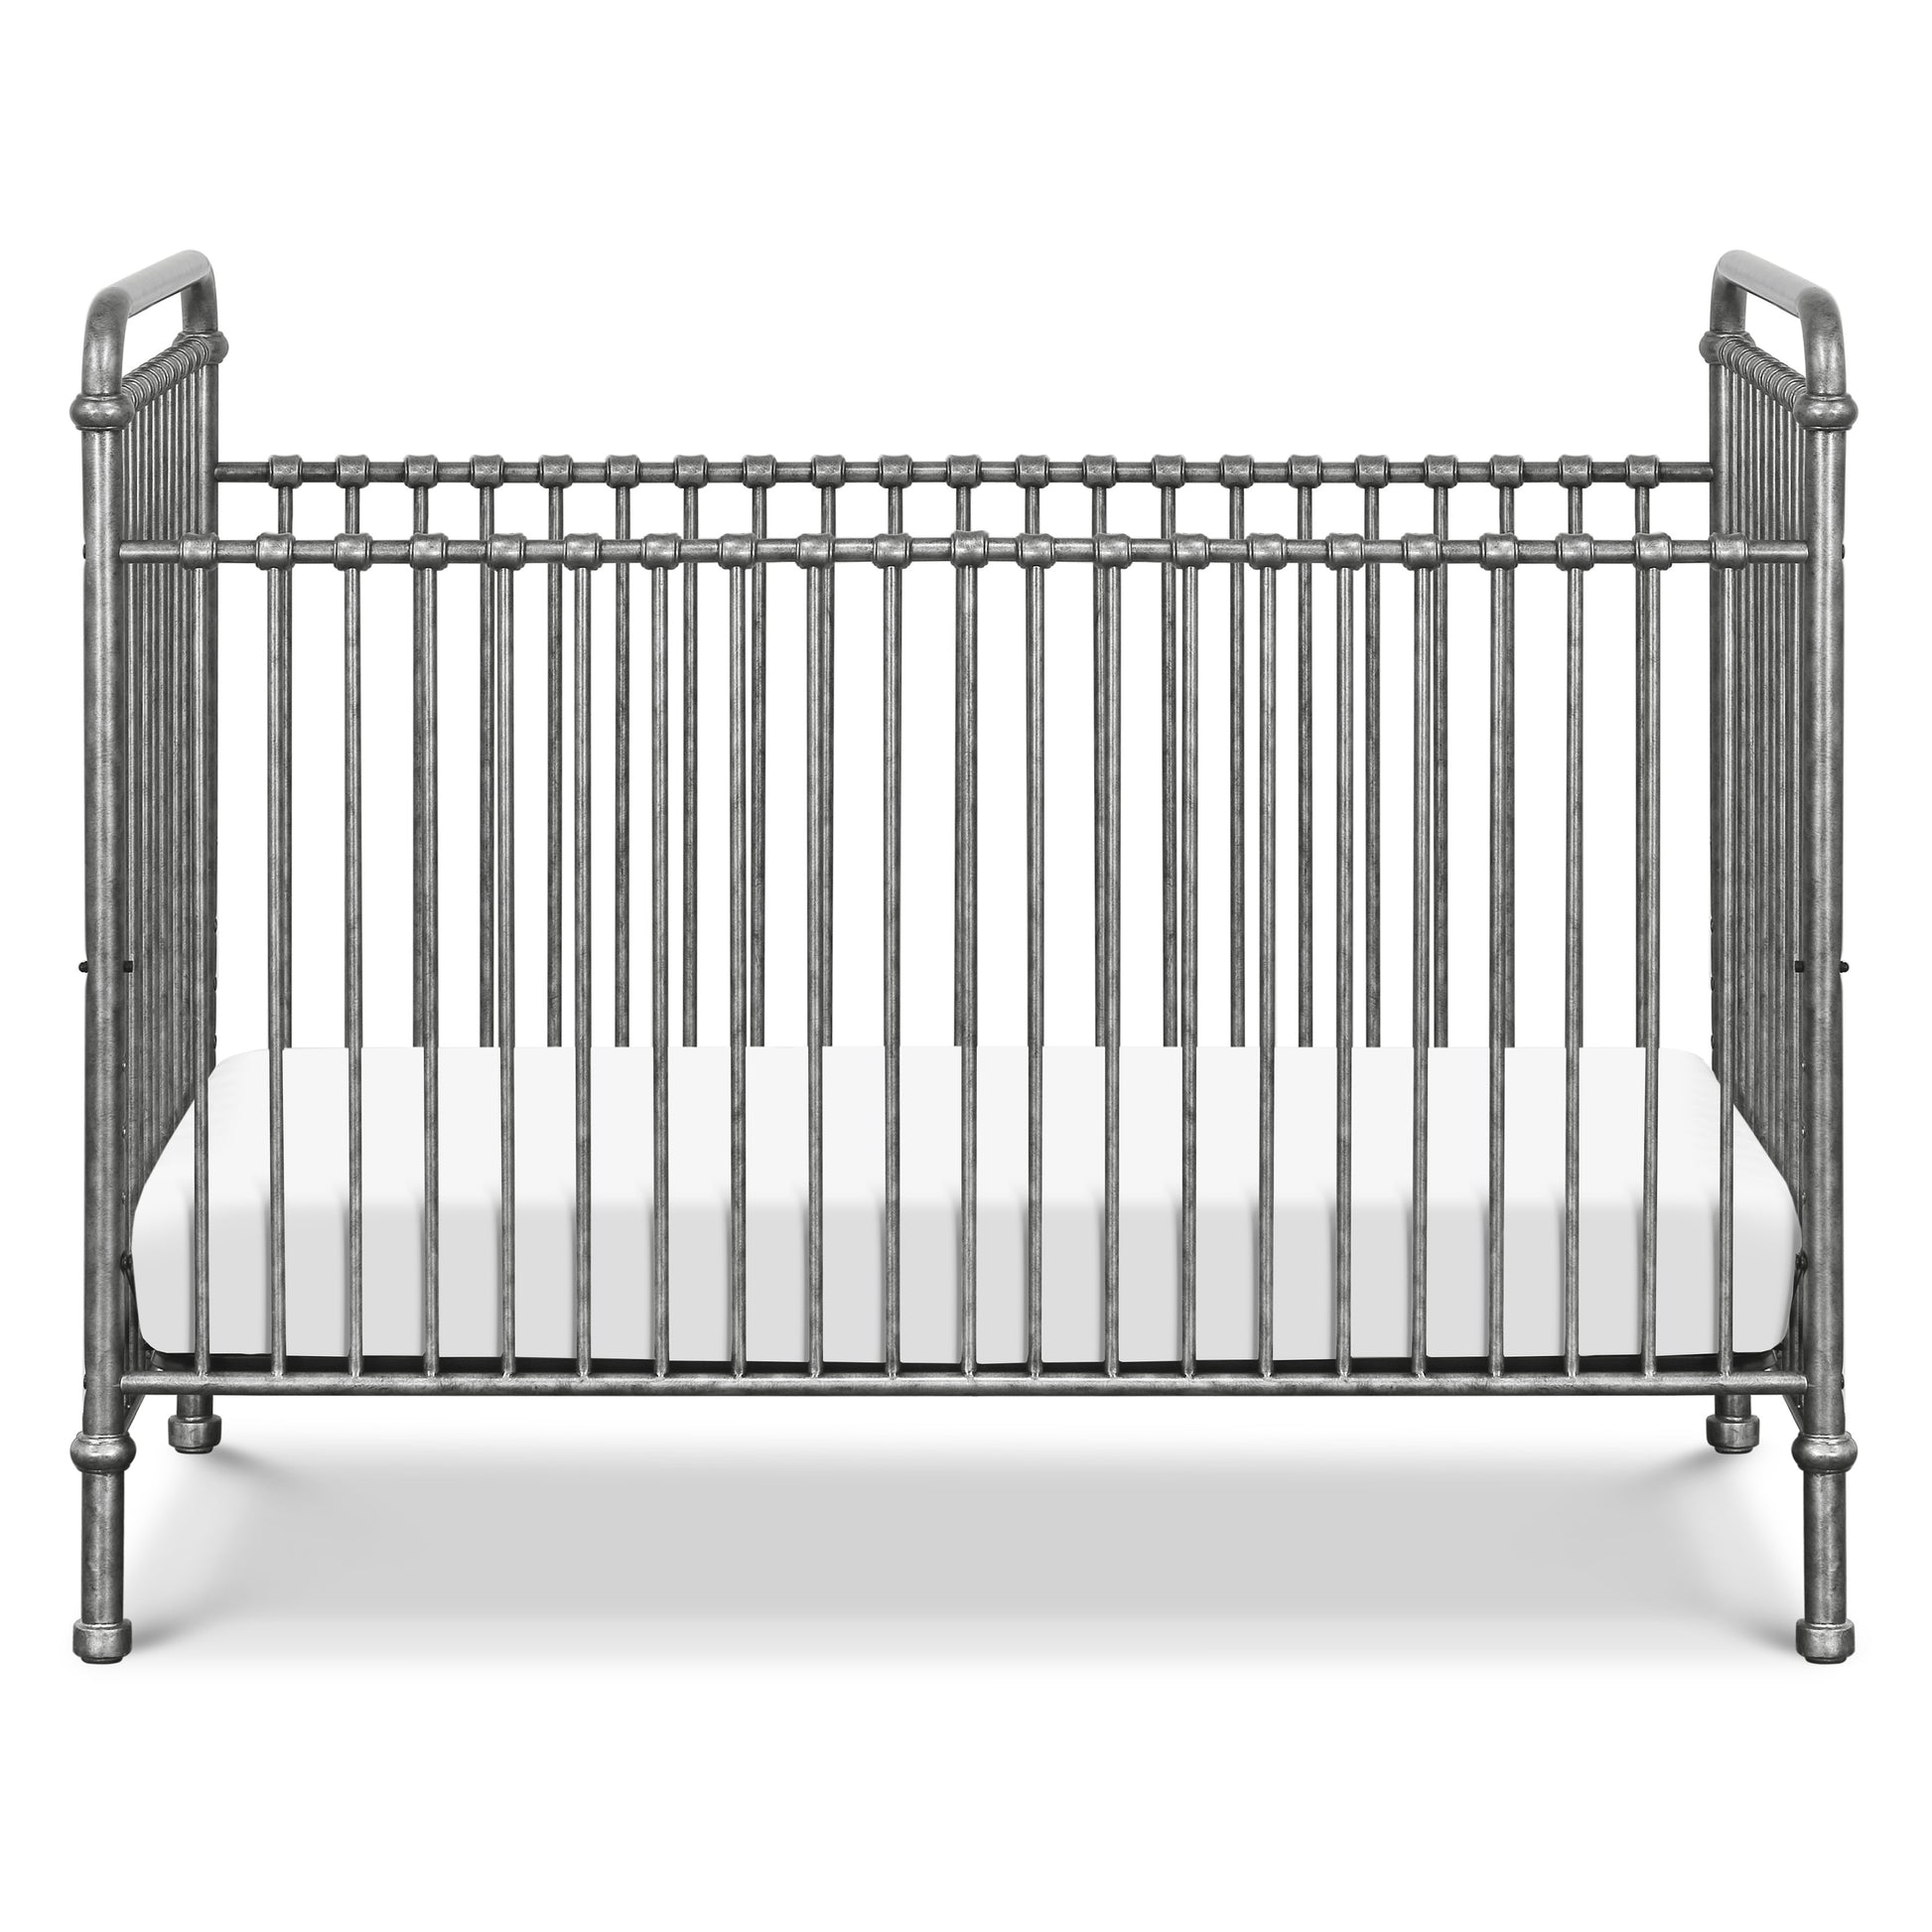 M15501VS,Abigail 3-in-1 Convertible Crib in Vintage Silver